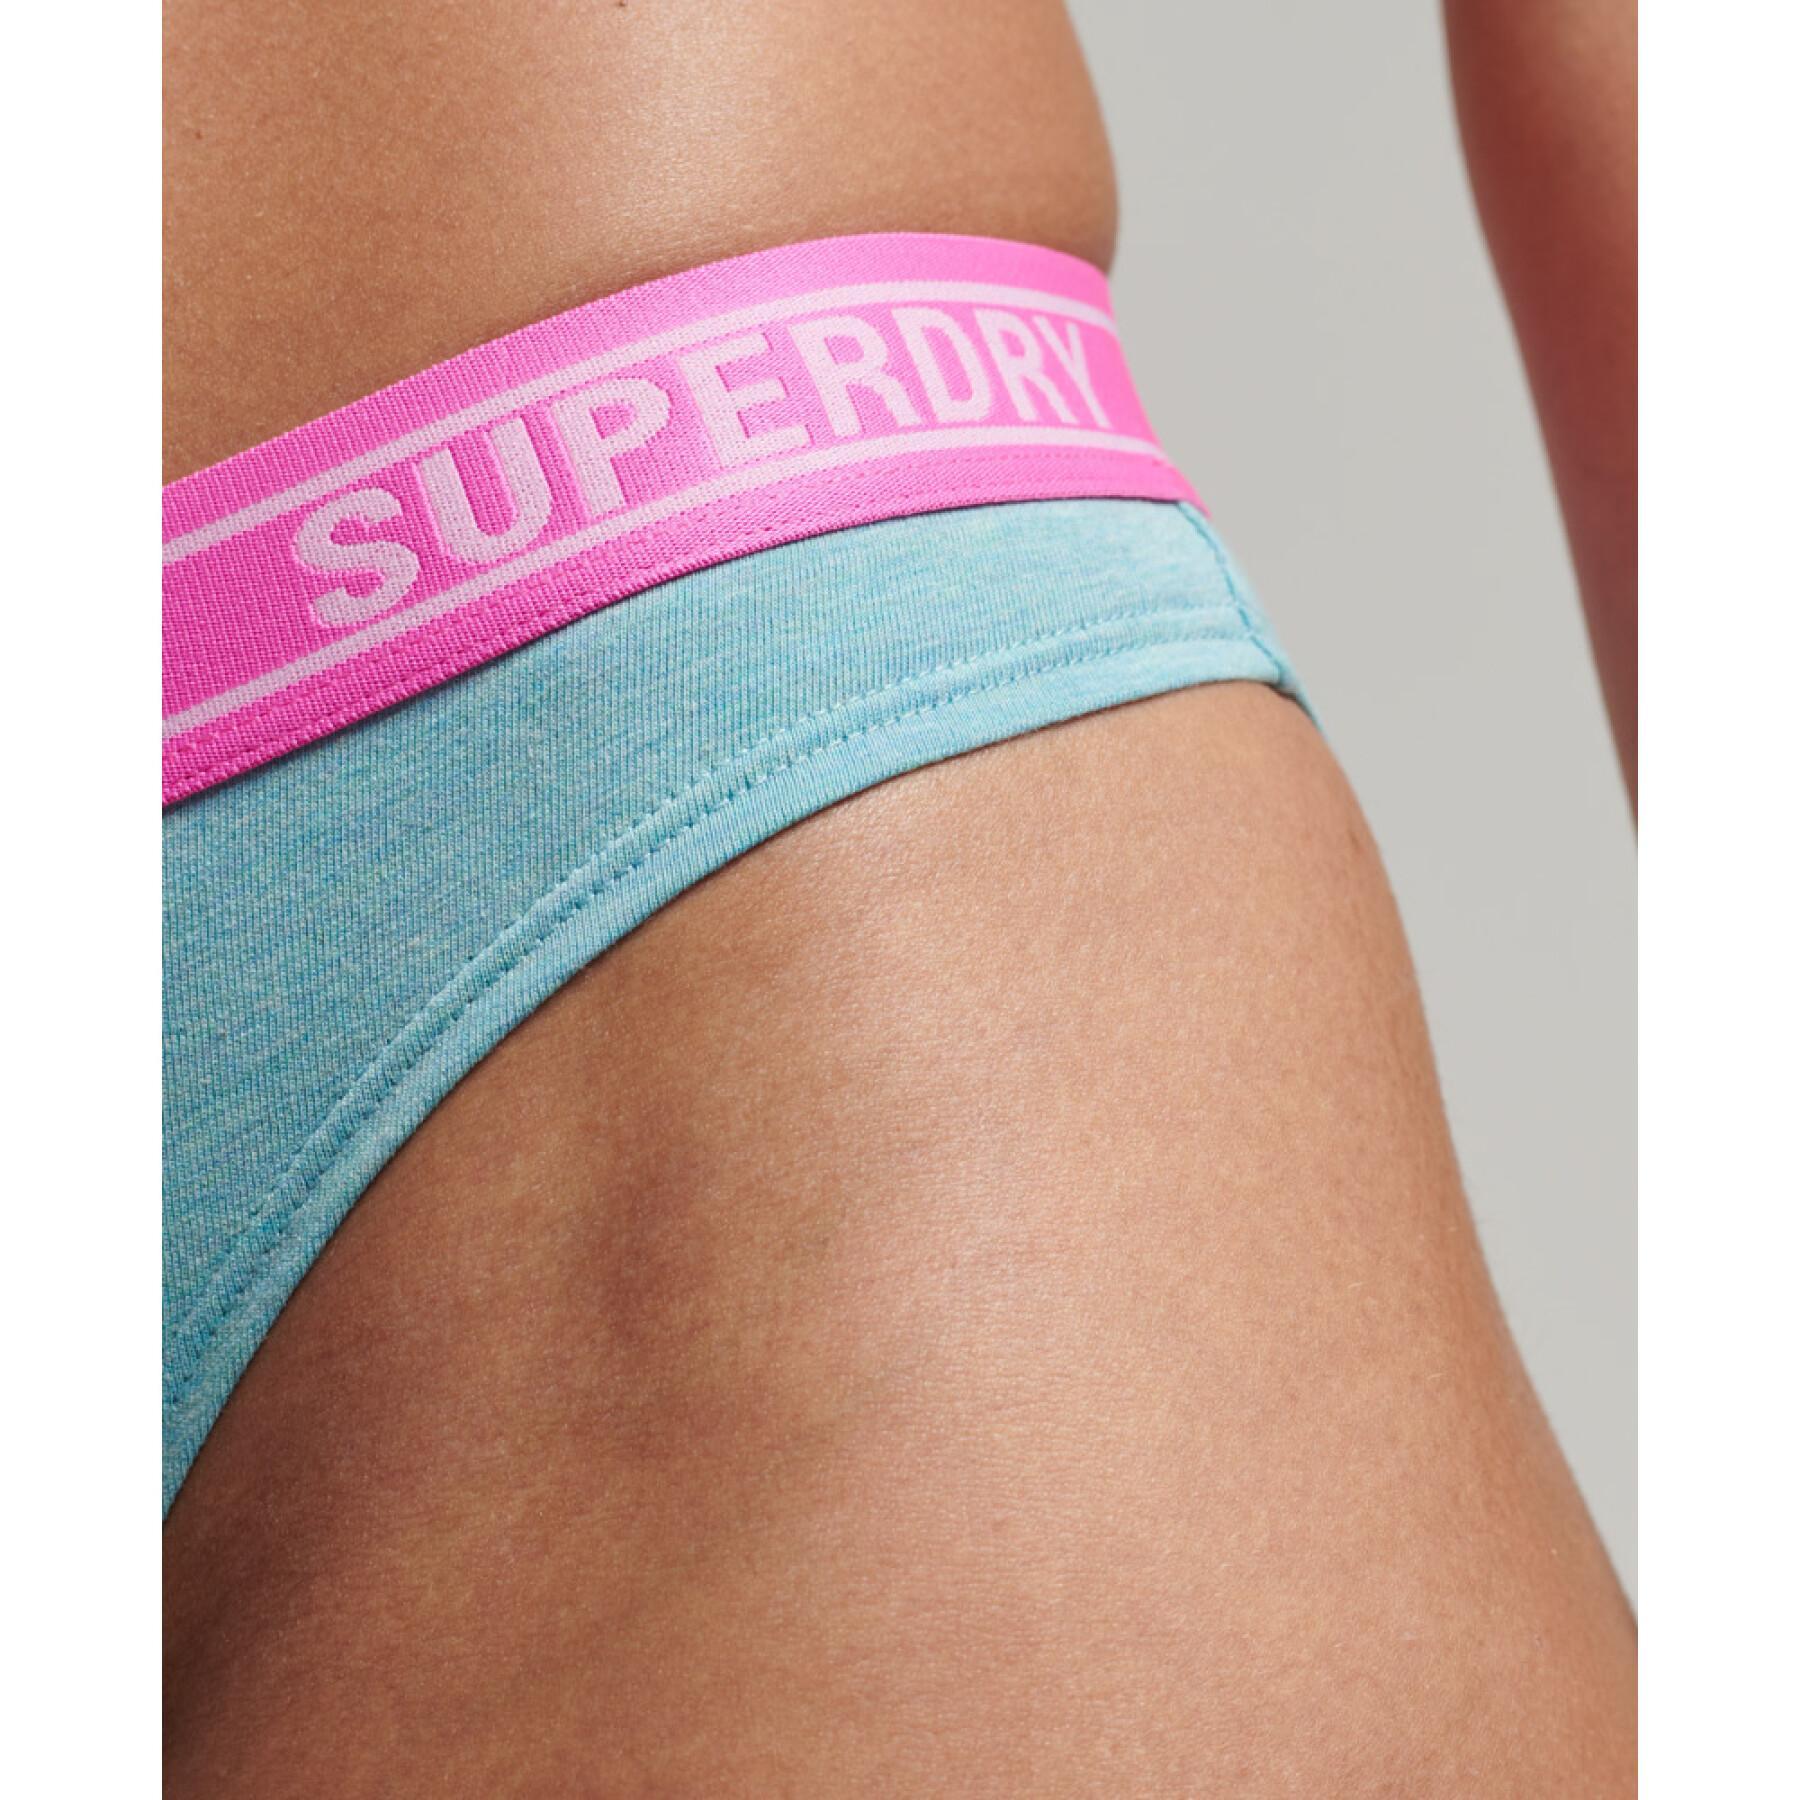 Damesslipjes Superdry Multi Logo